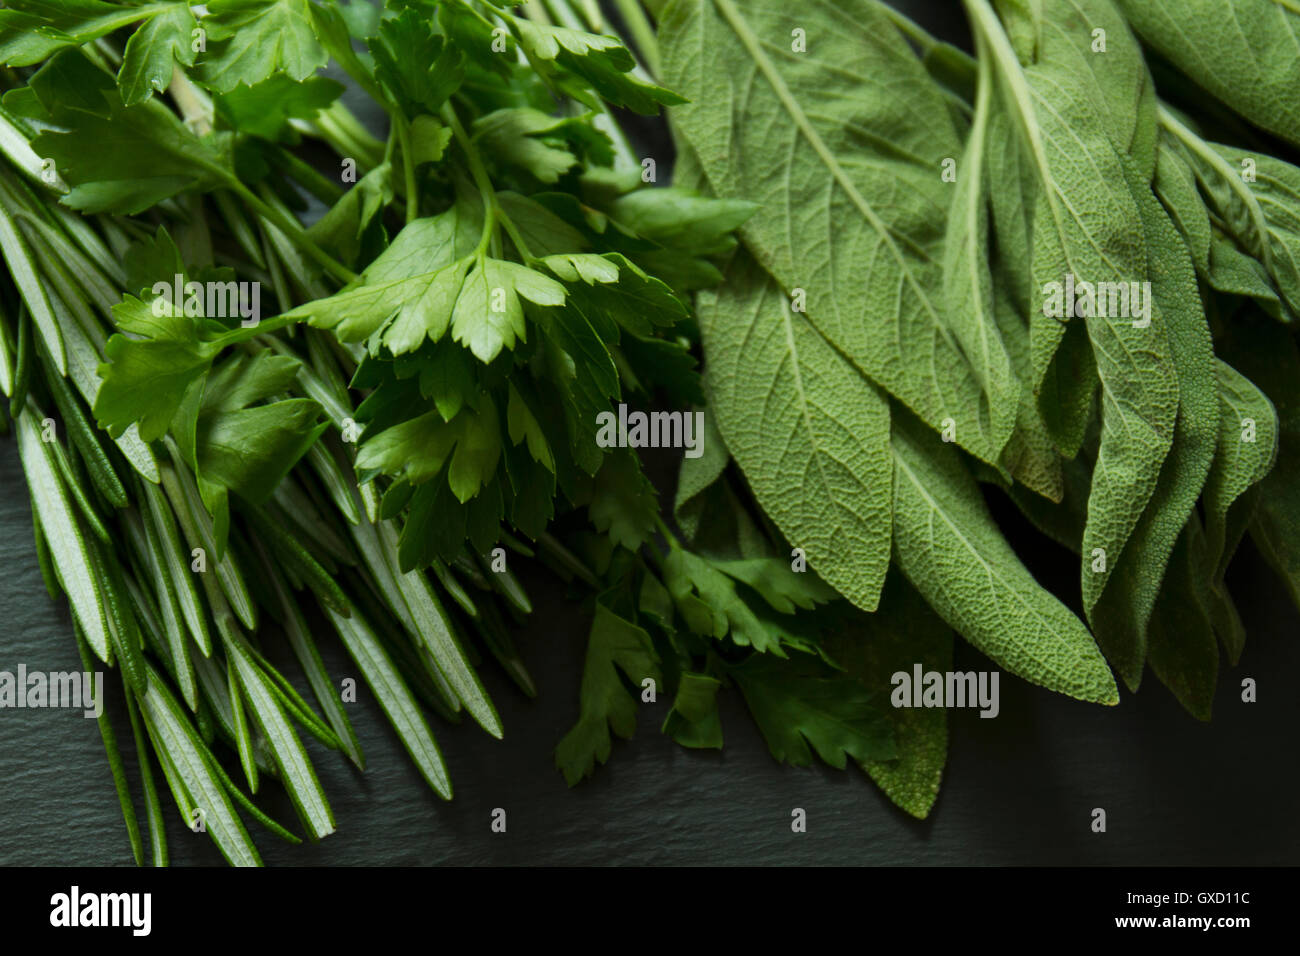 Rosemary, Sage and parsley on slate Stock Photo